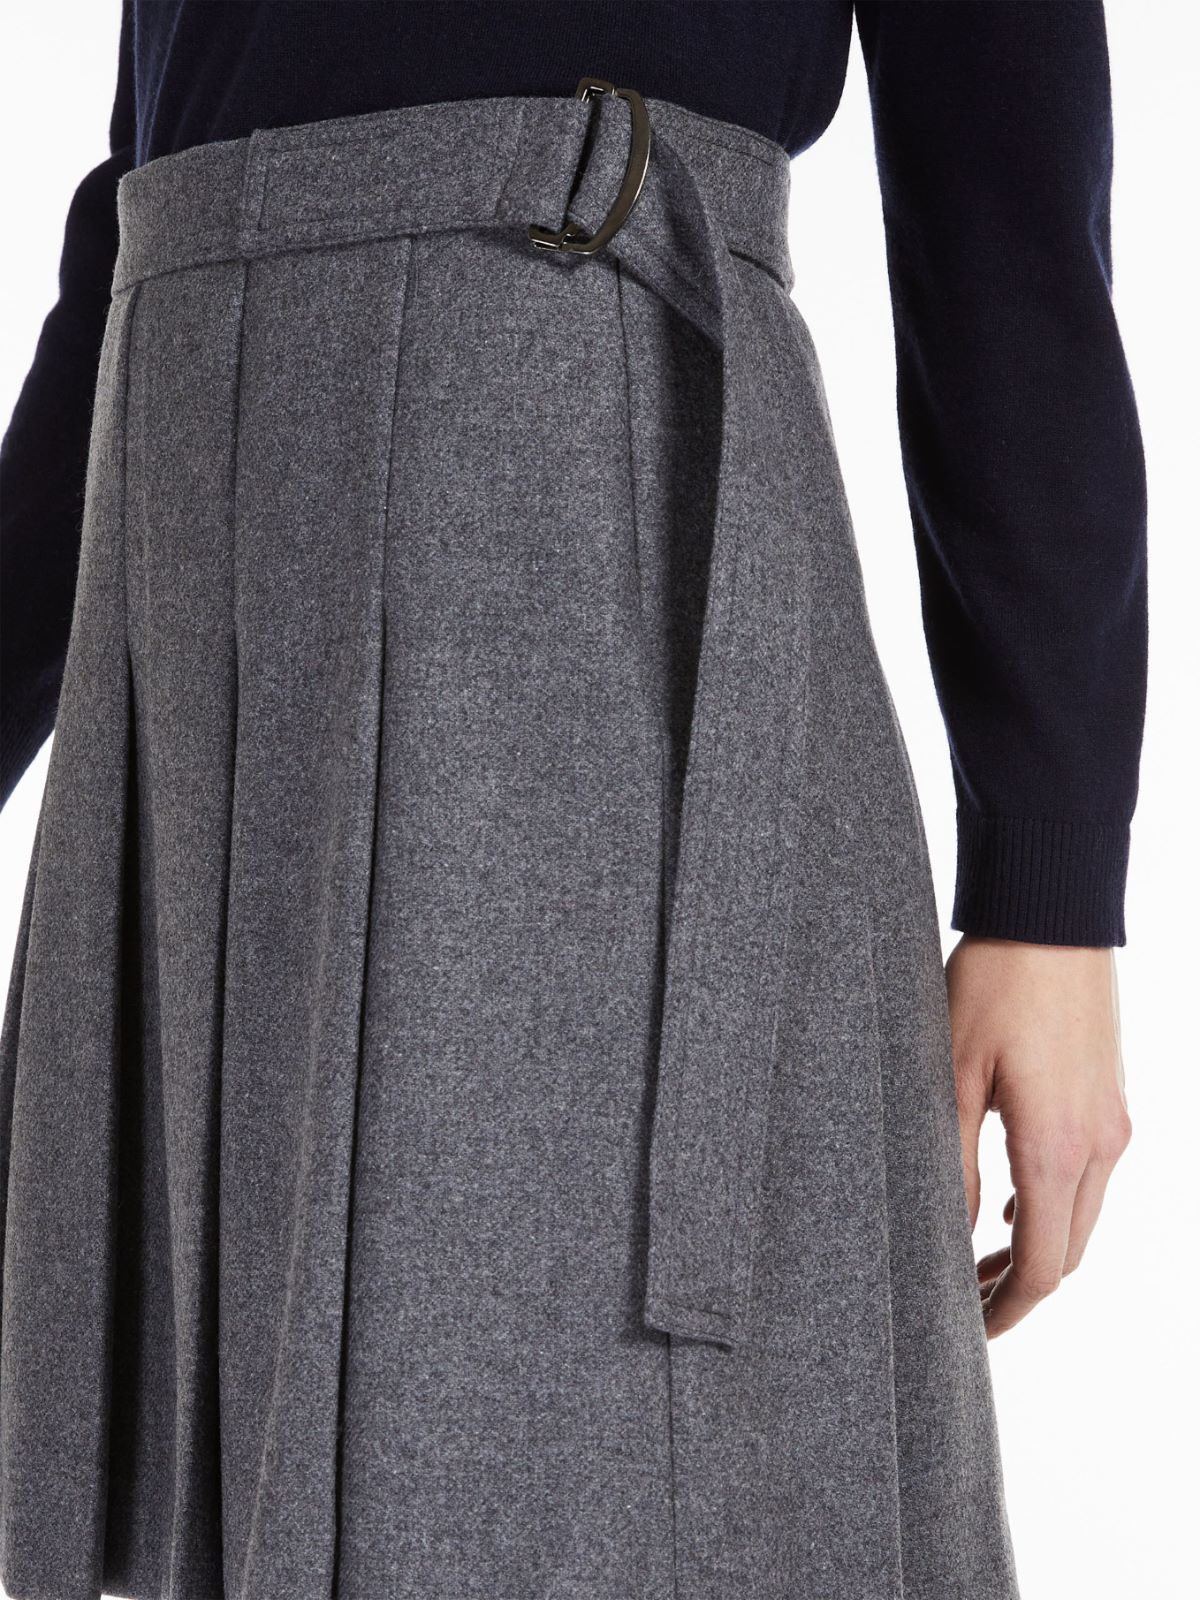 Wool flannel skirt - MEDIUM GREY - Weekend Max Mara - 4